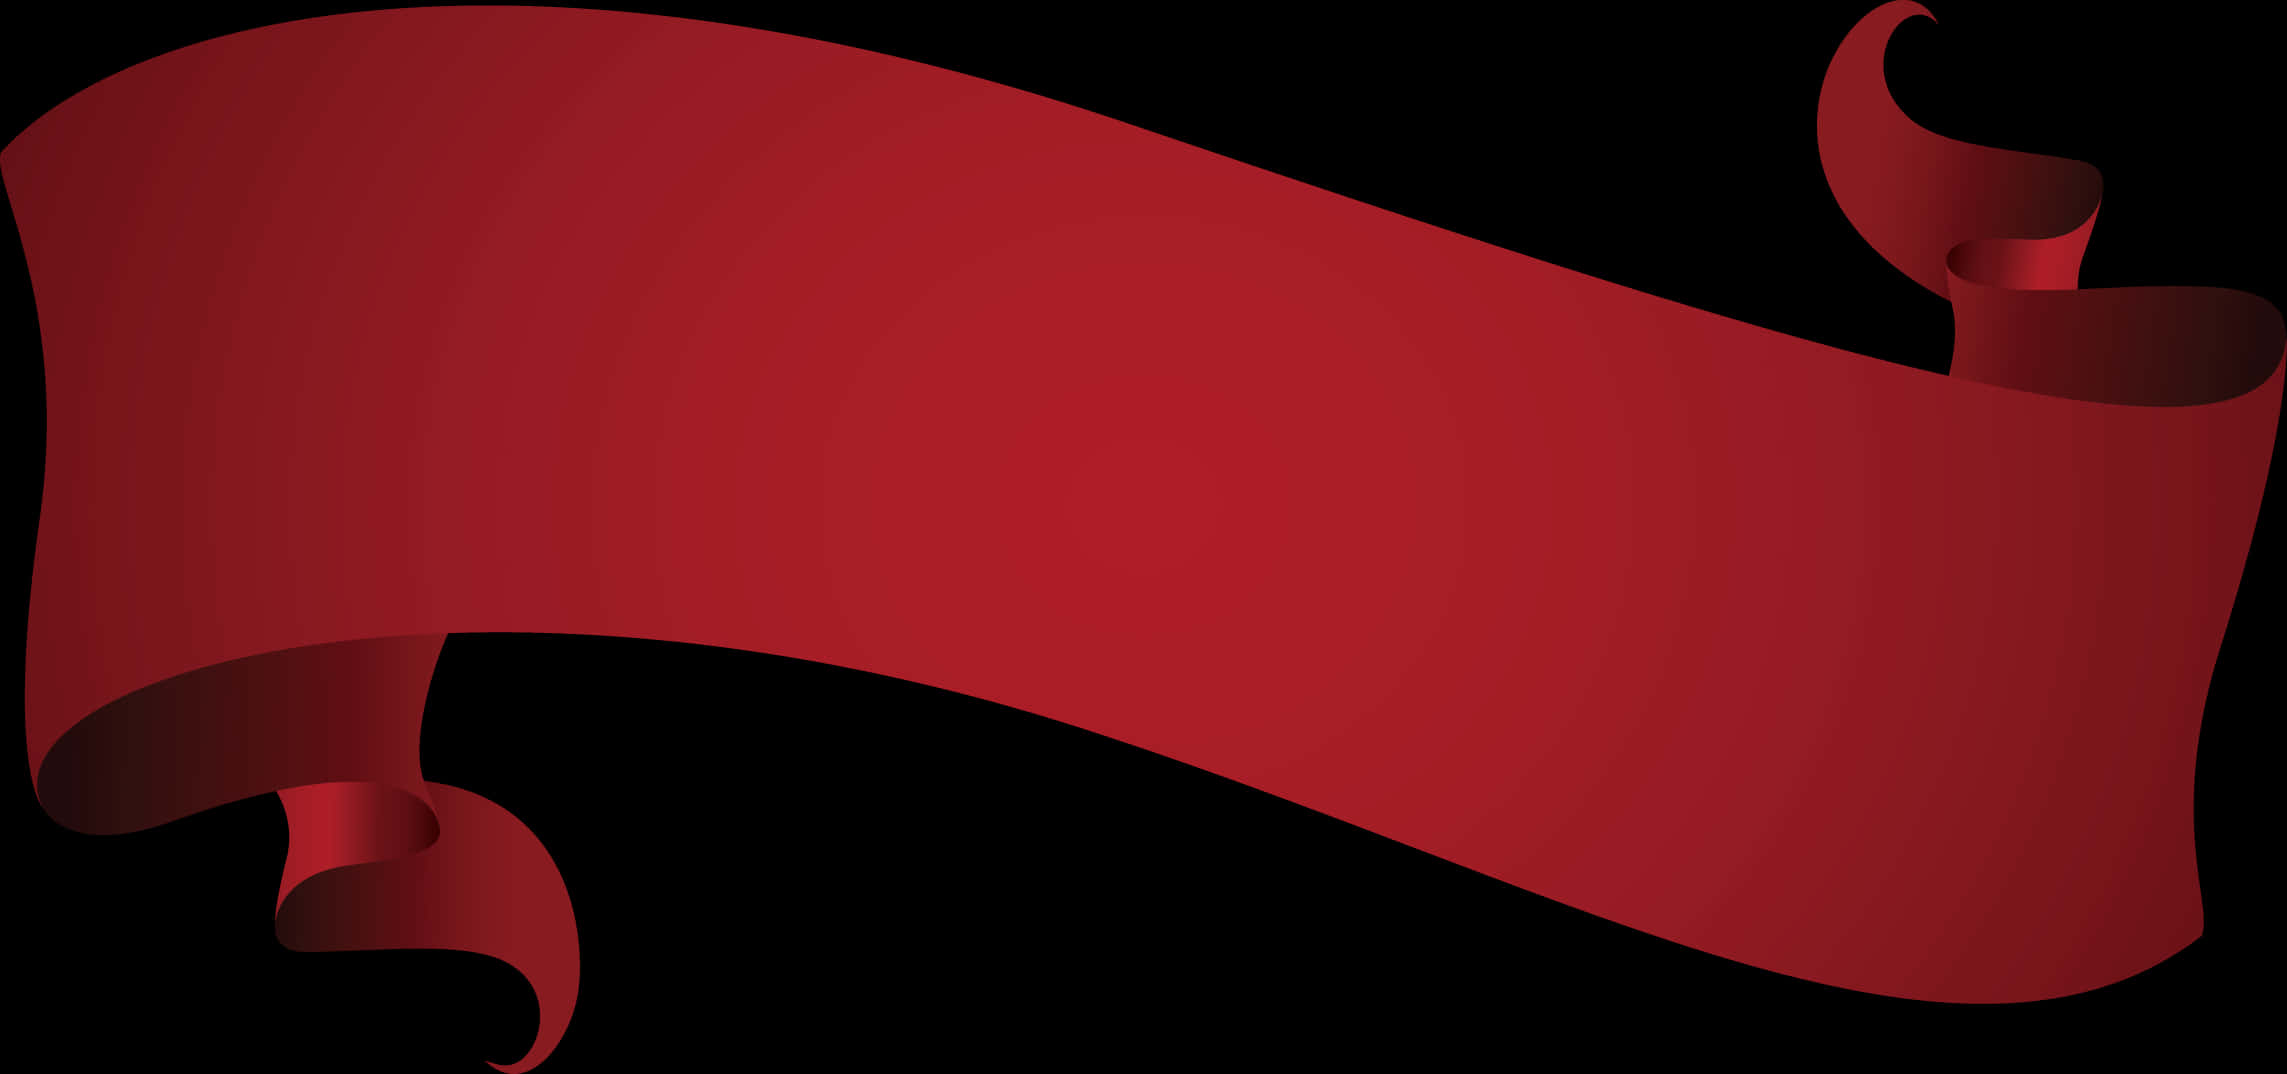 Elegant Red Ribbon Banner PNG